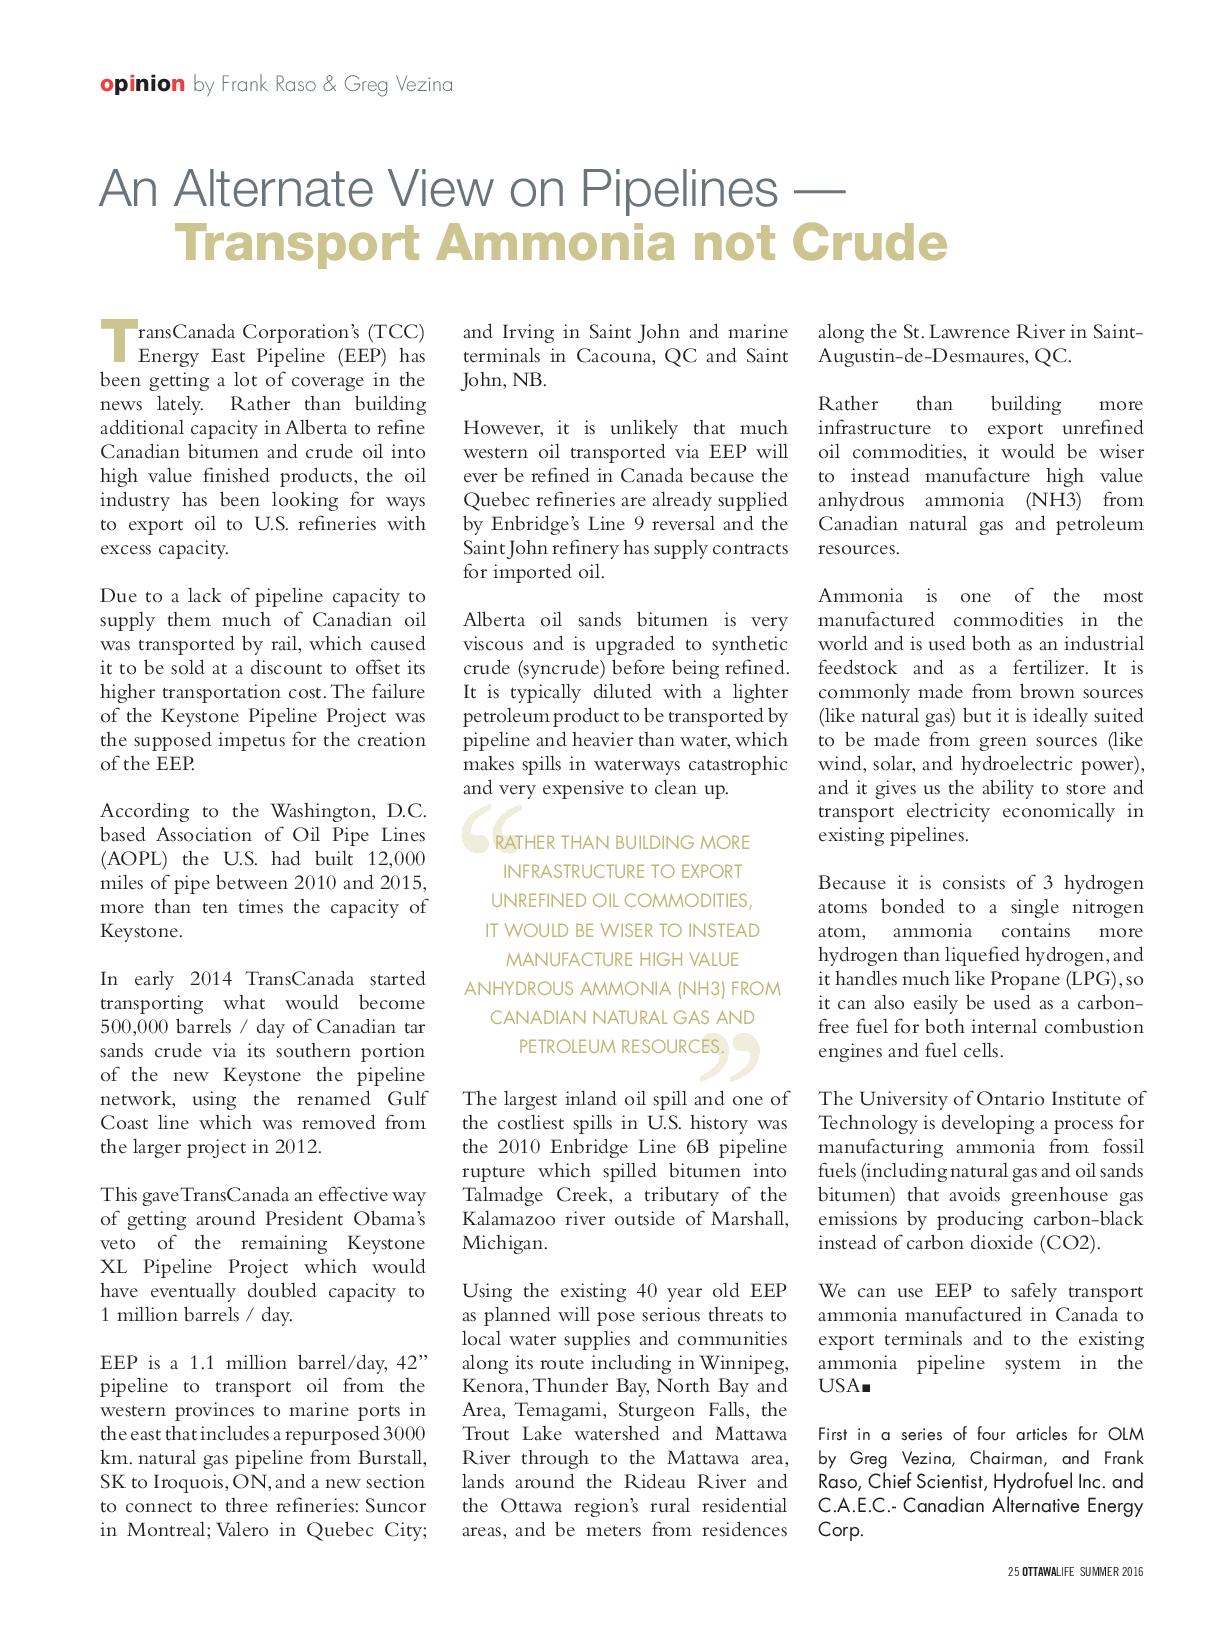 Ottawa Life - Transport ammonia not crude